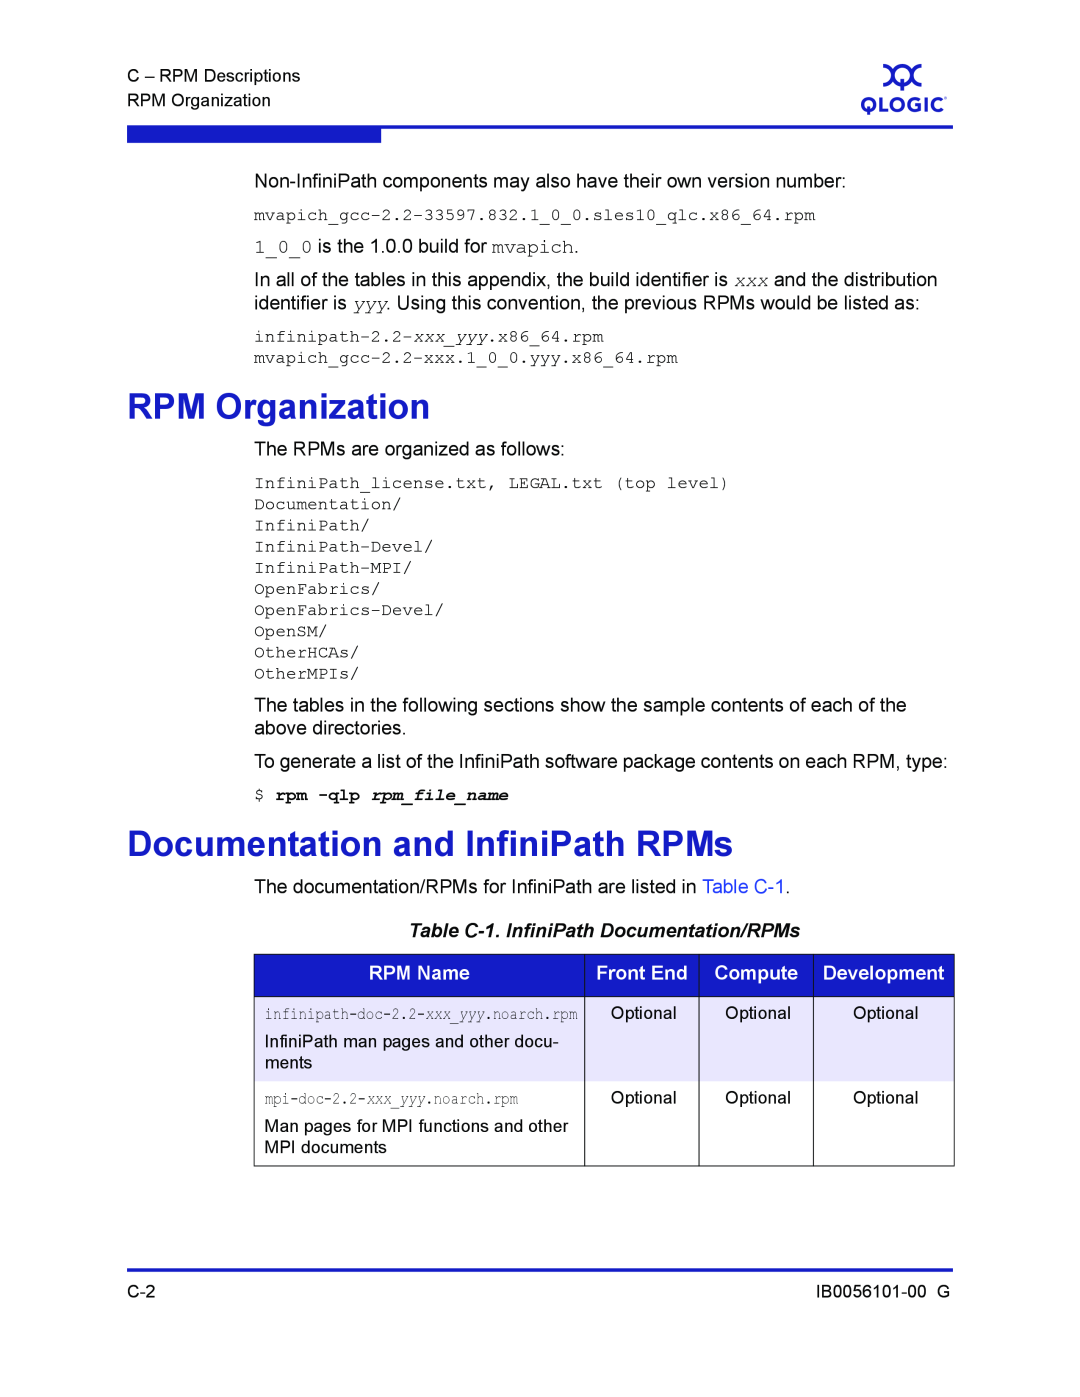 Q-Logic IB0056101-00 G manual RPM Organization, Documentation and InfiniPath RPMs, Table C-1. InfiniPath Documentation/RPMs 